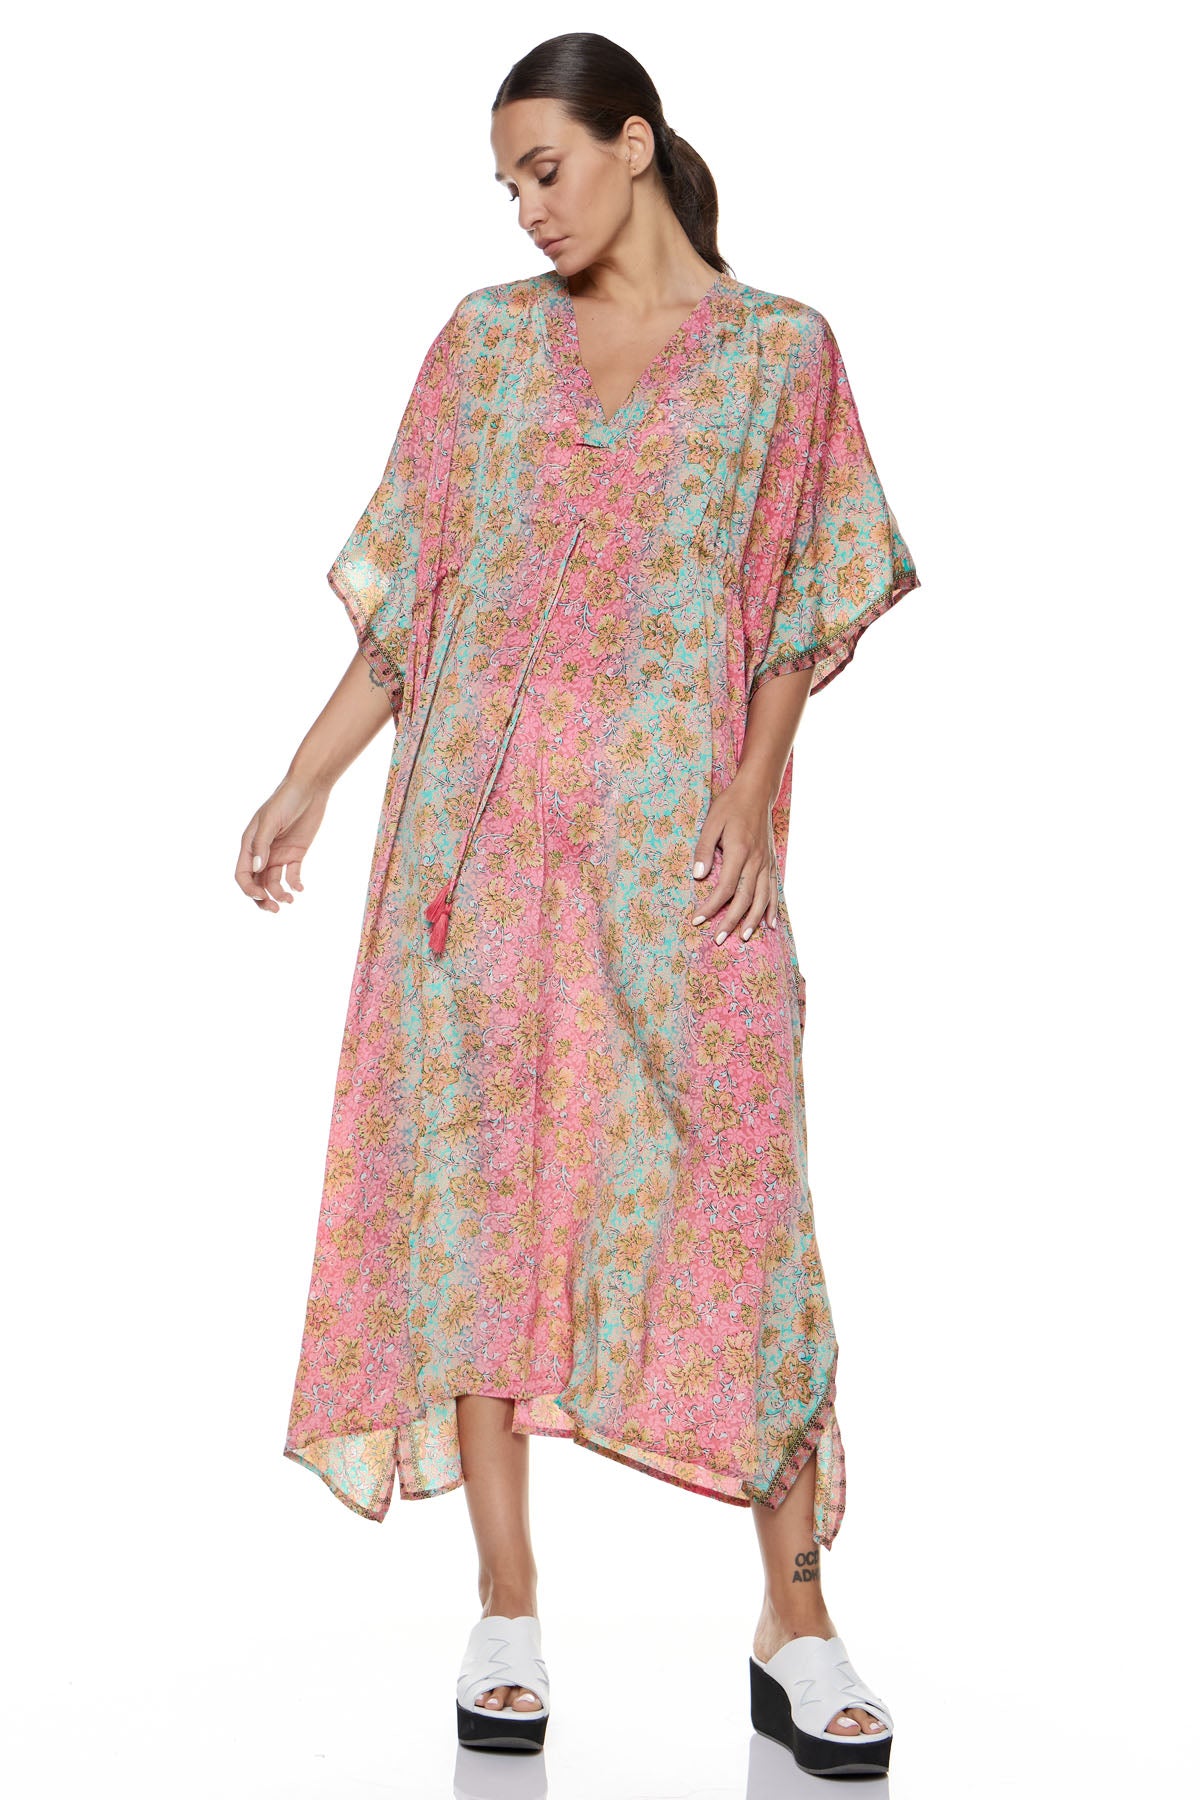 Chic & Simple Lalela Kaftan Dress - Pink/Mint/Beige Floral Knowmad